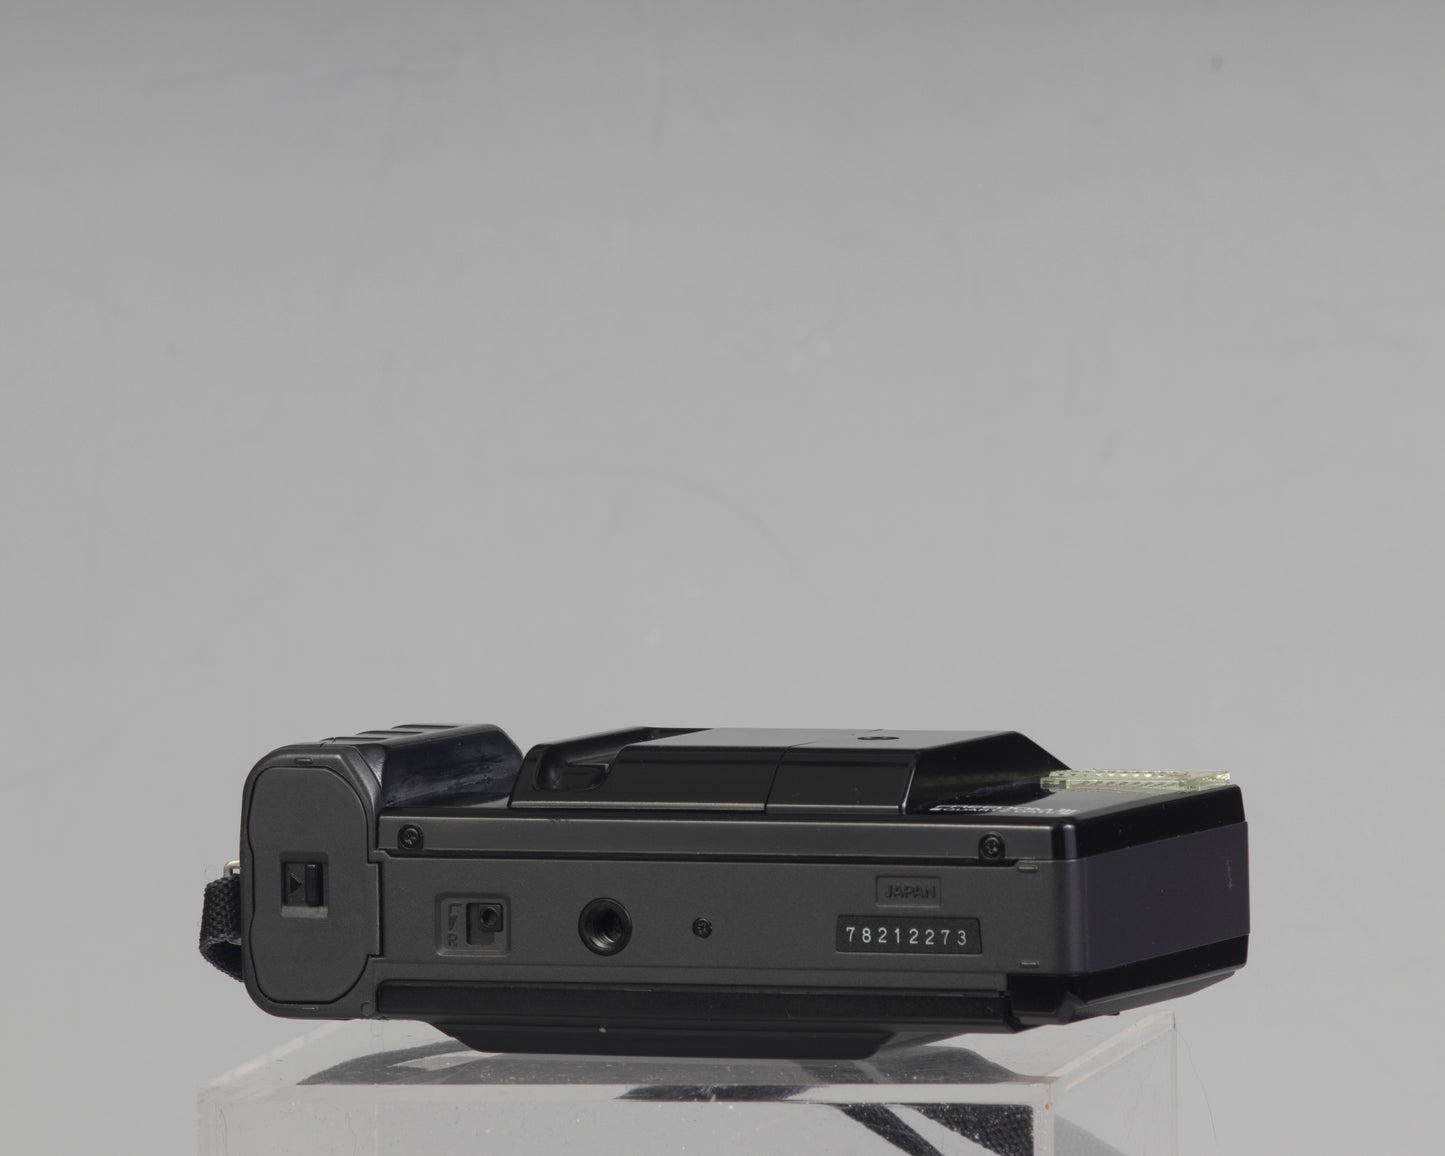 Appareil photo compact Minolta Freedom III 35 mm